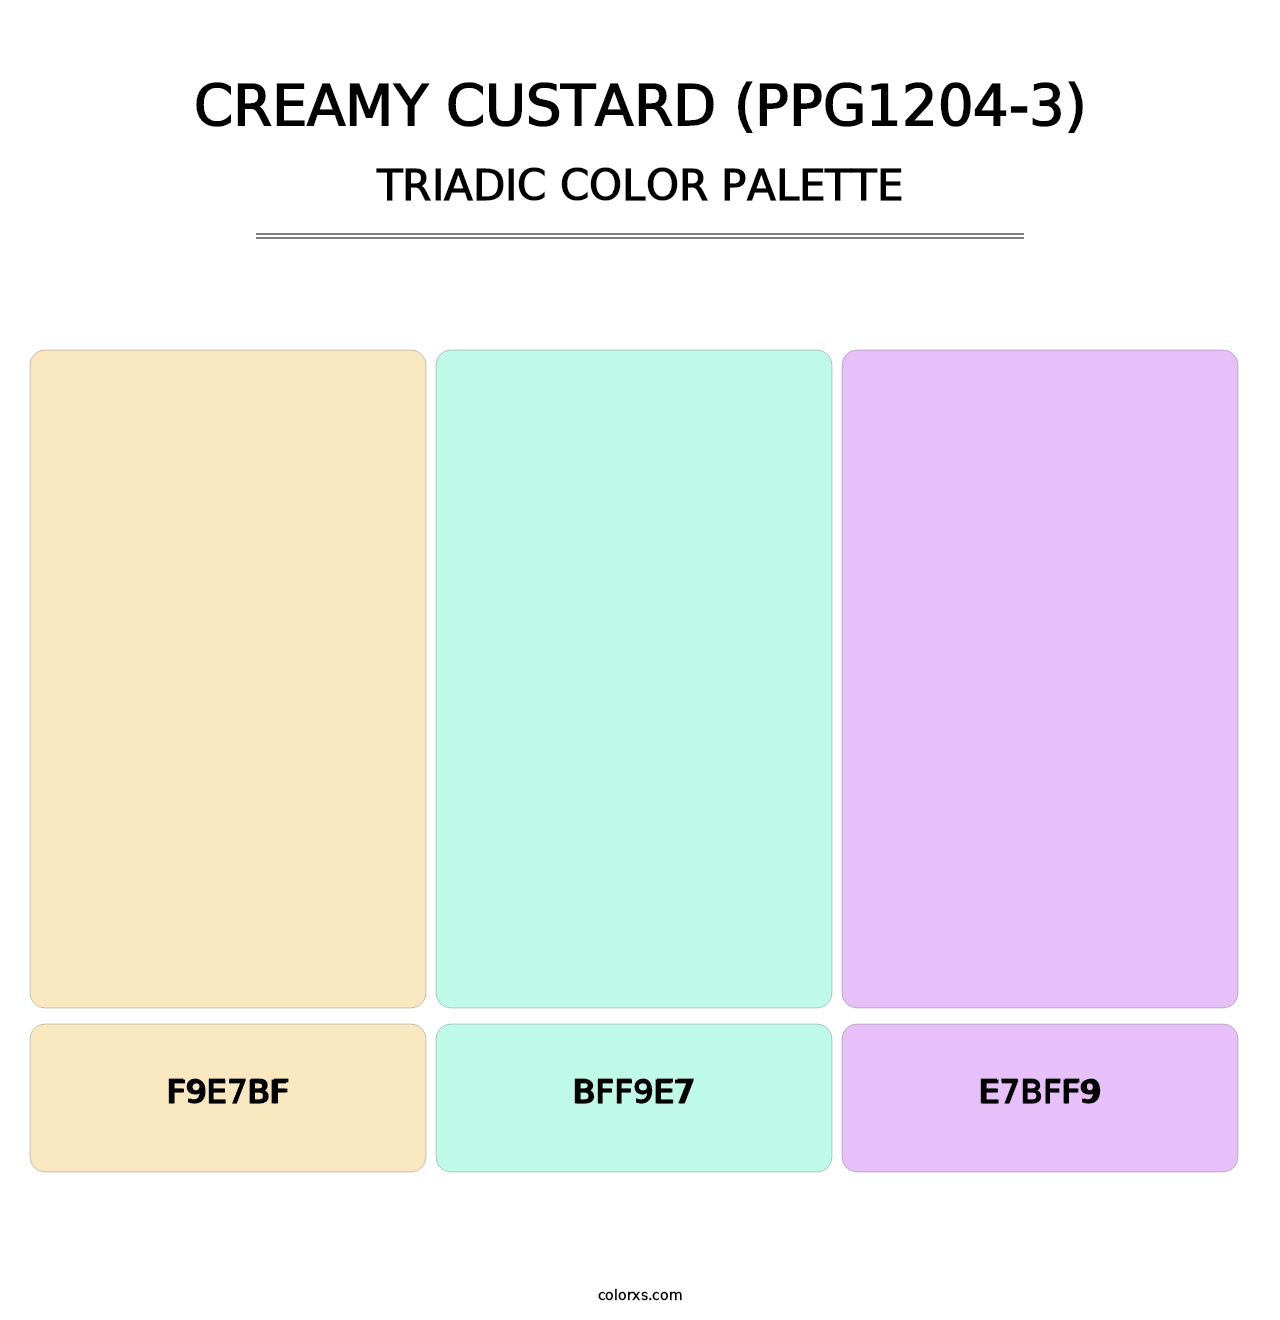 Creamy Custard (PPG1204-3) - Triadic Color Palette